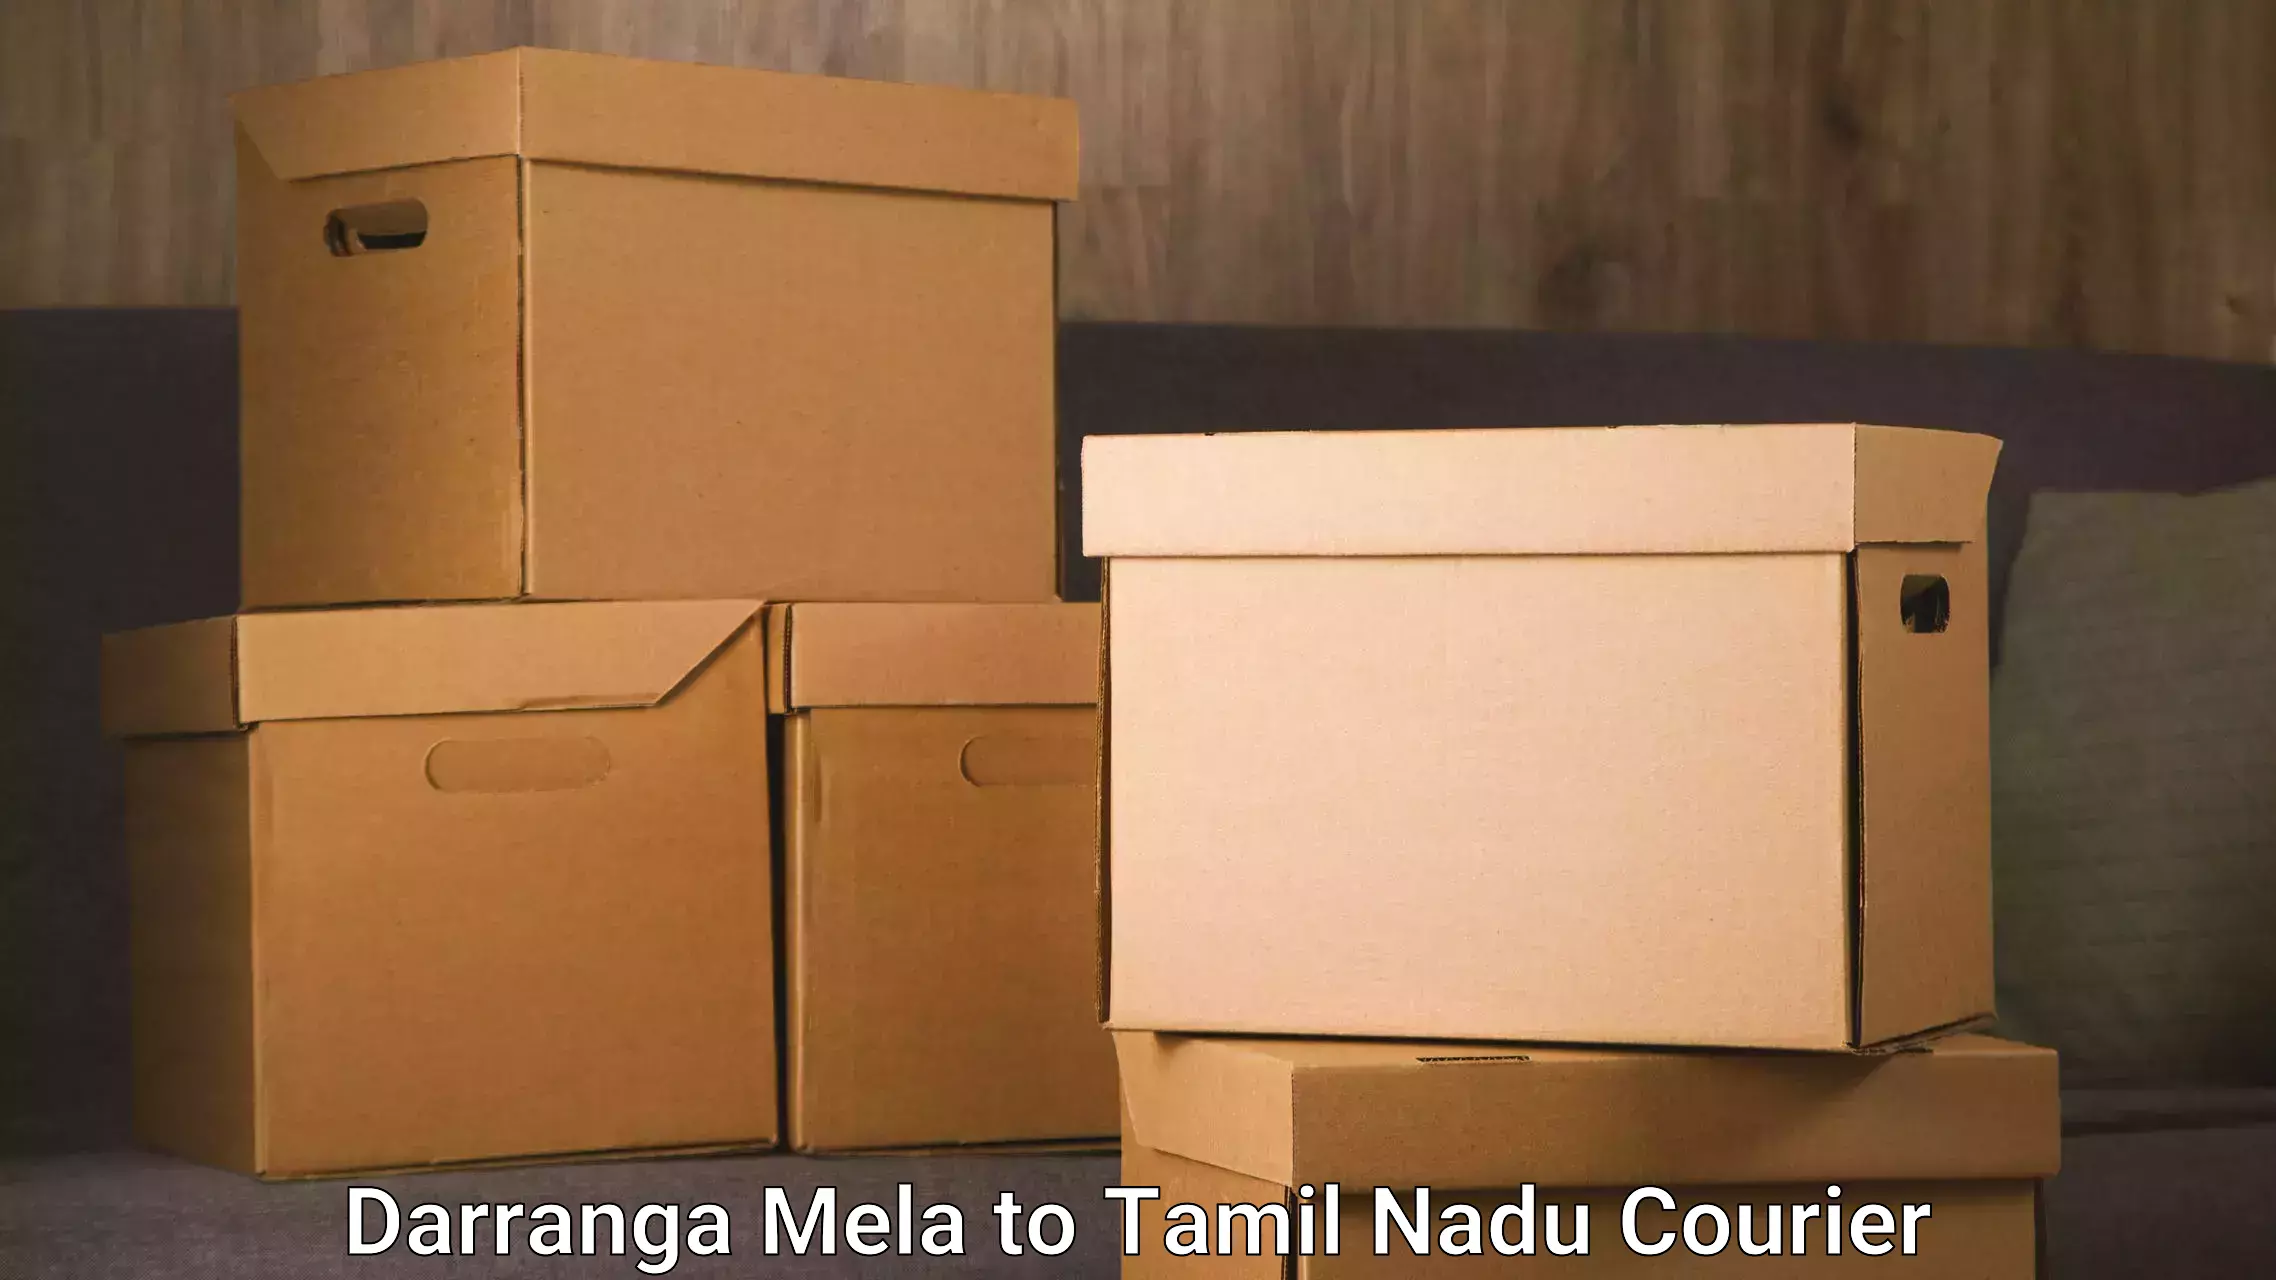 Online package tracking Darranga Mela to Tamil Nadu